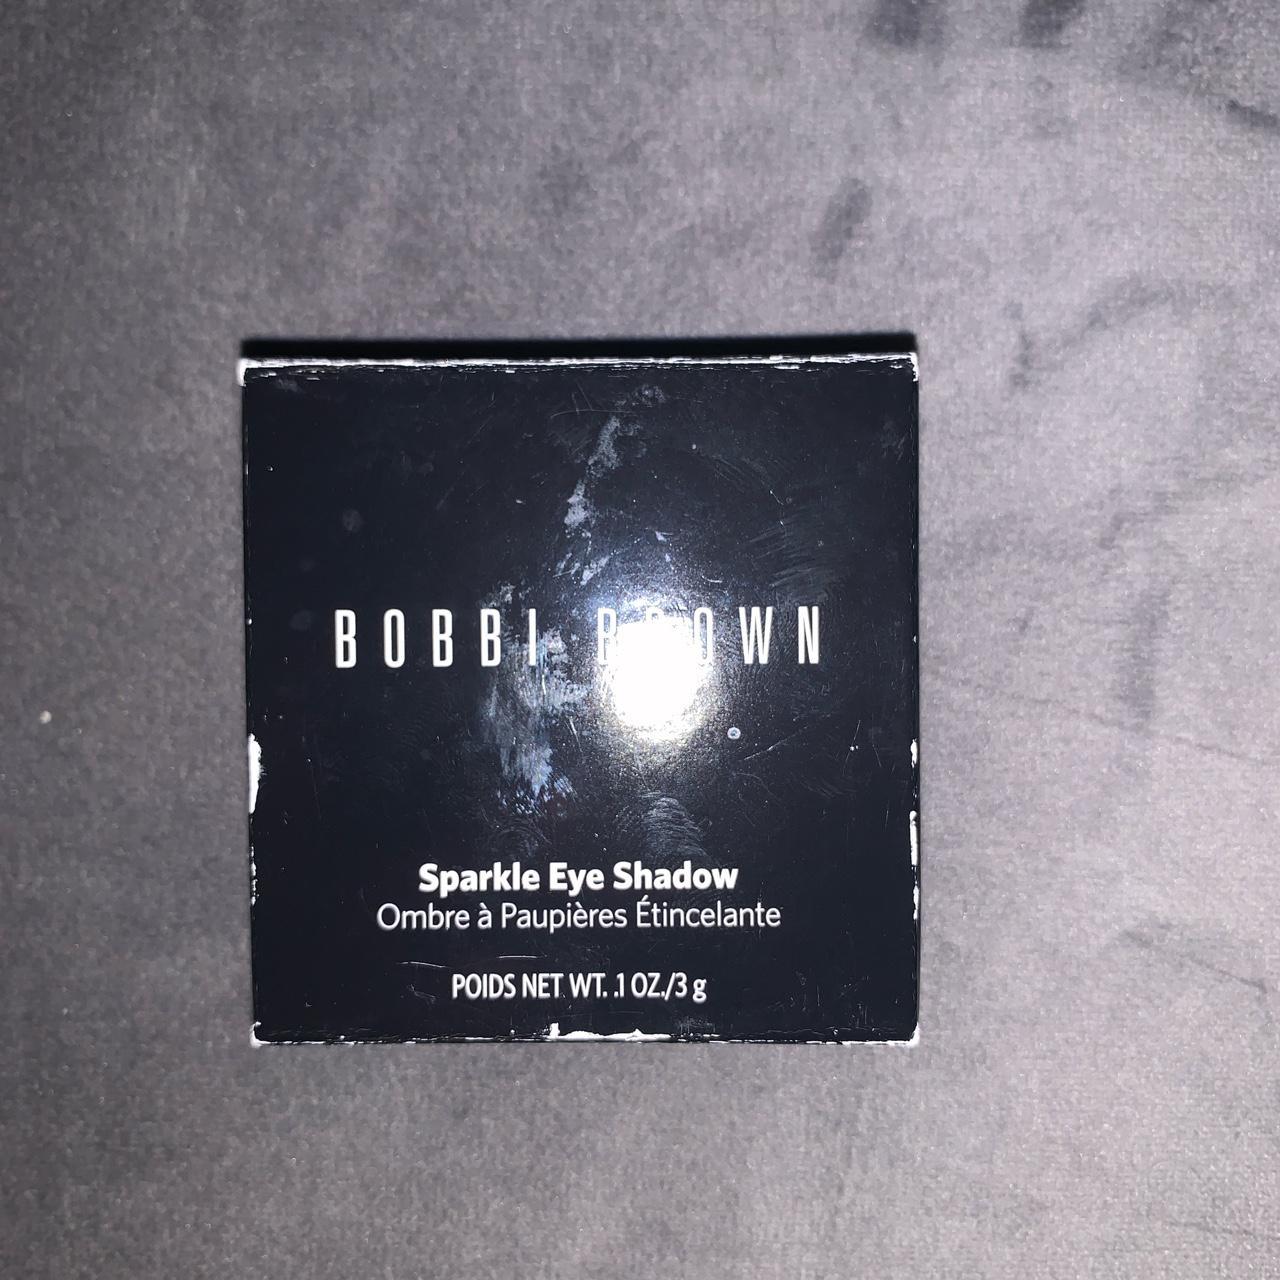 Product Image 2 - Bobbi brown sparkle eye shadow